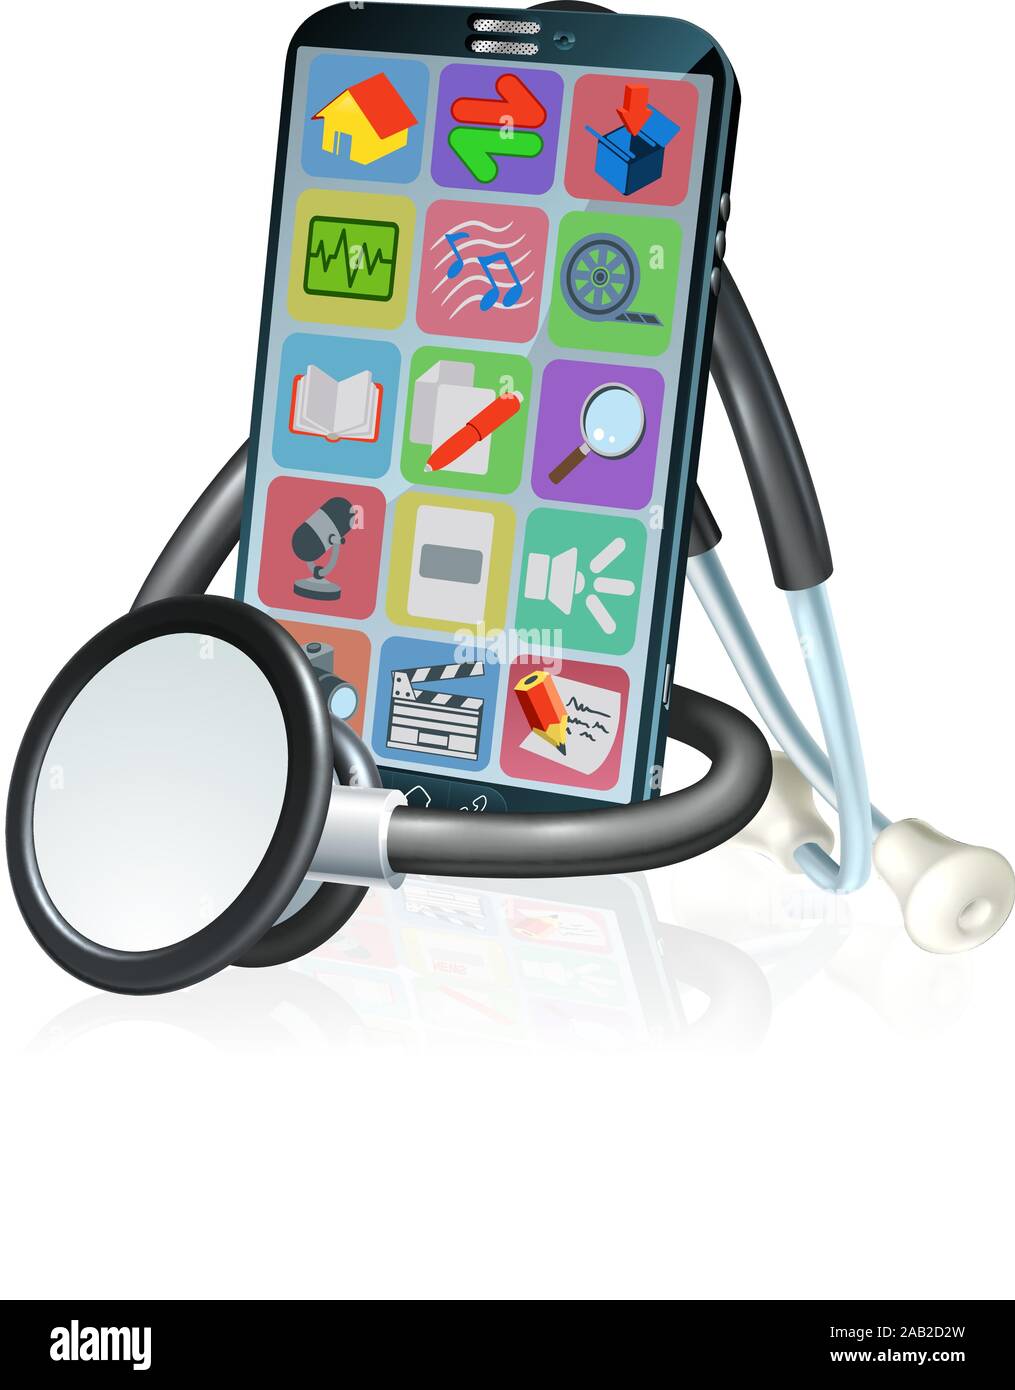 Mobile Phone Health Medical App Stethoscope Design Stock Vector